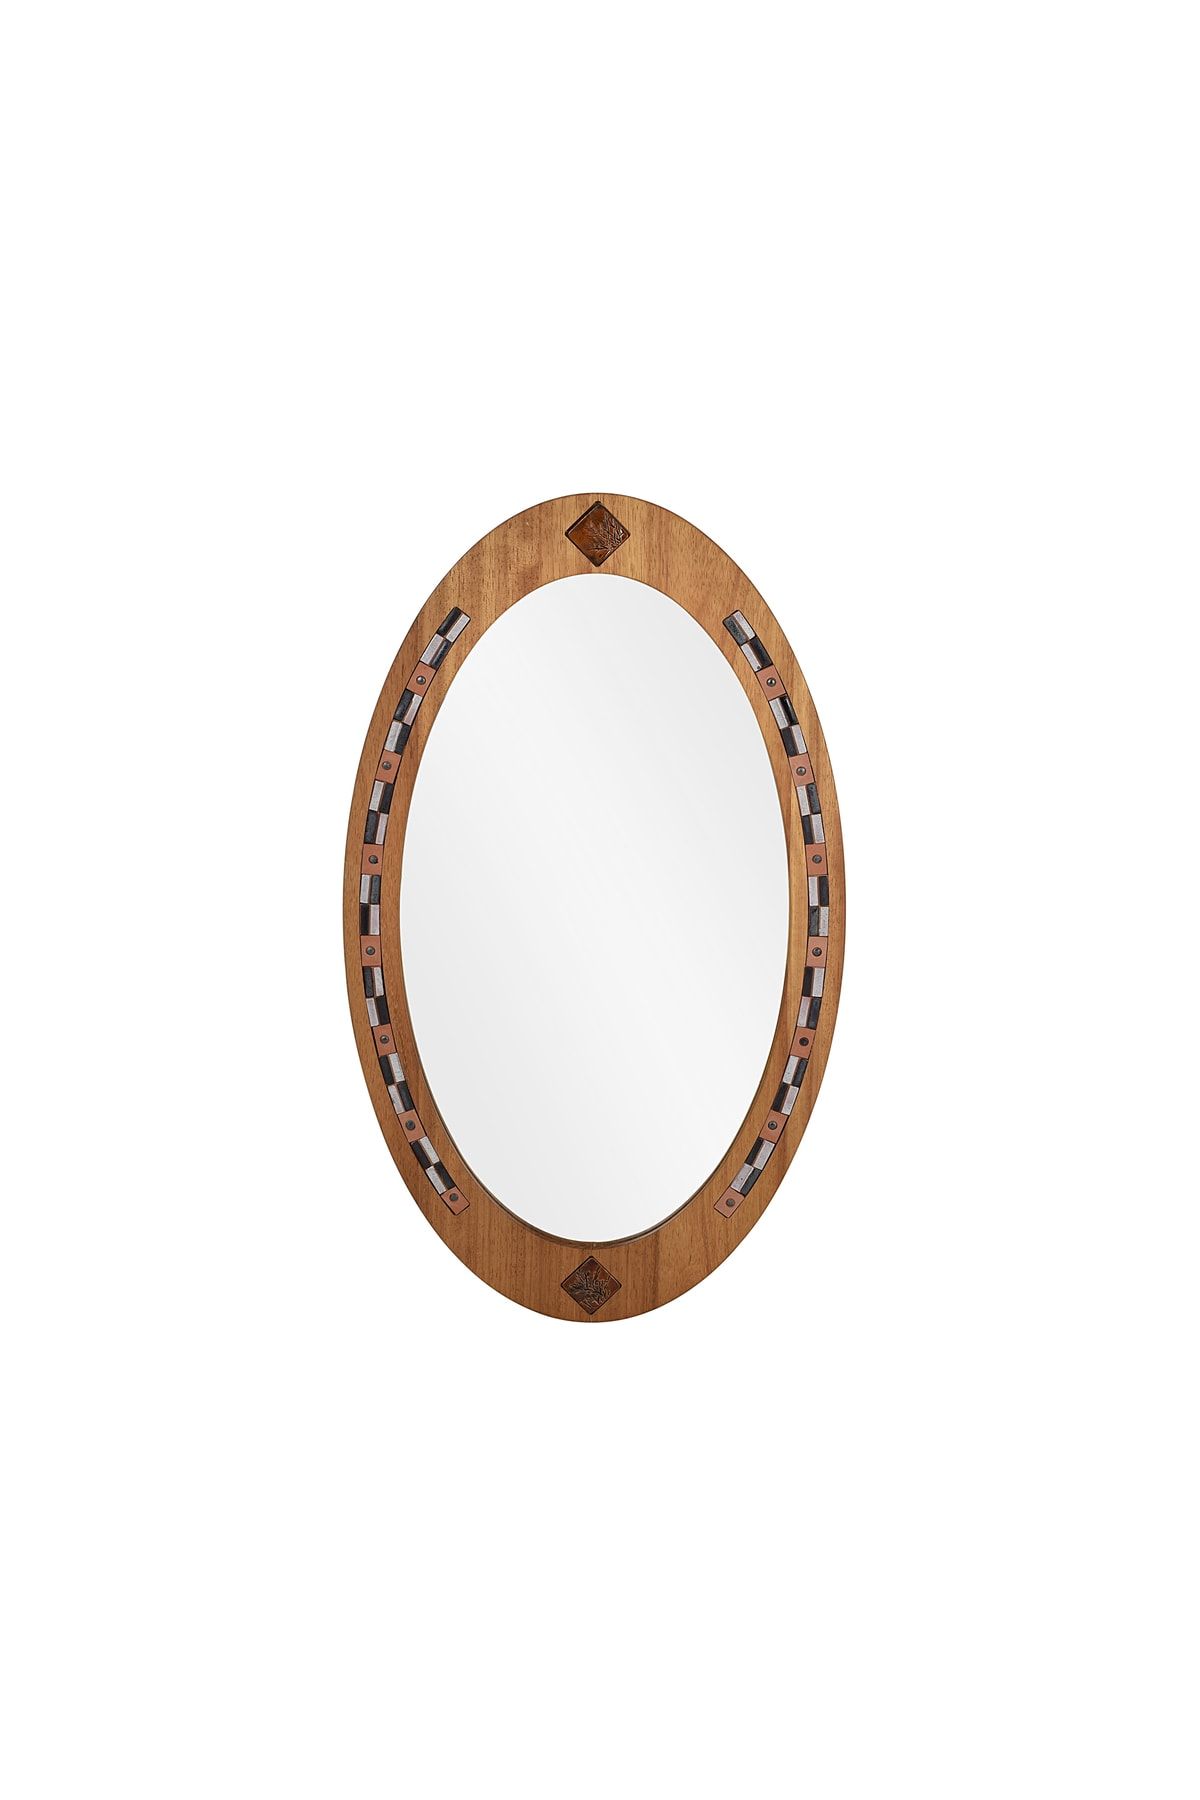 GUGAR WOOD Iroko Ahşap Oval Ayna Hayali - Tasarım Dekoratif Ahşap Ayna- Seramikli Oval Ahşap Ayna Küçük